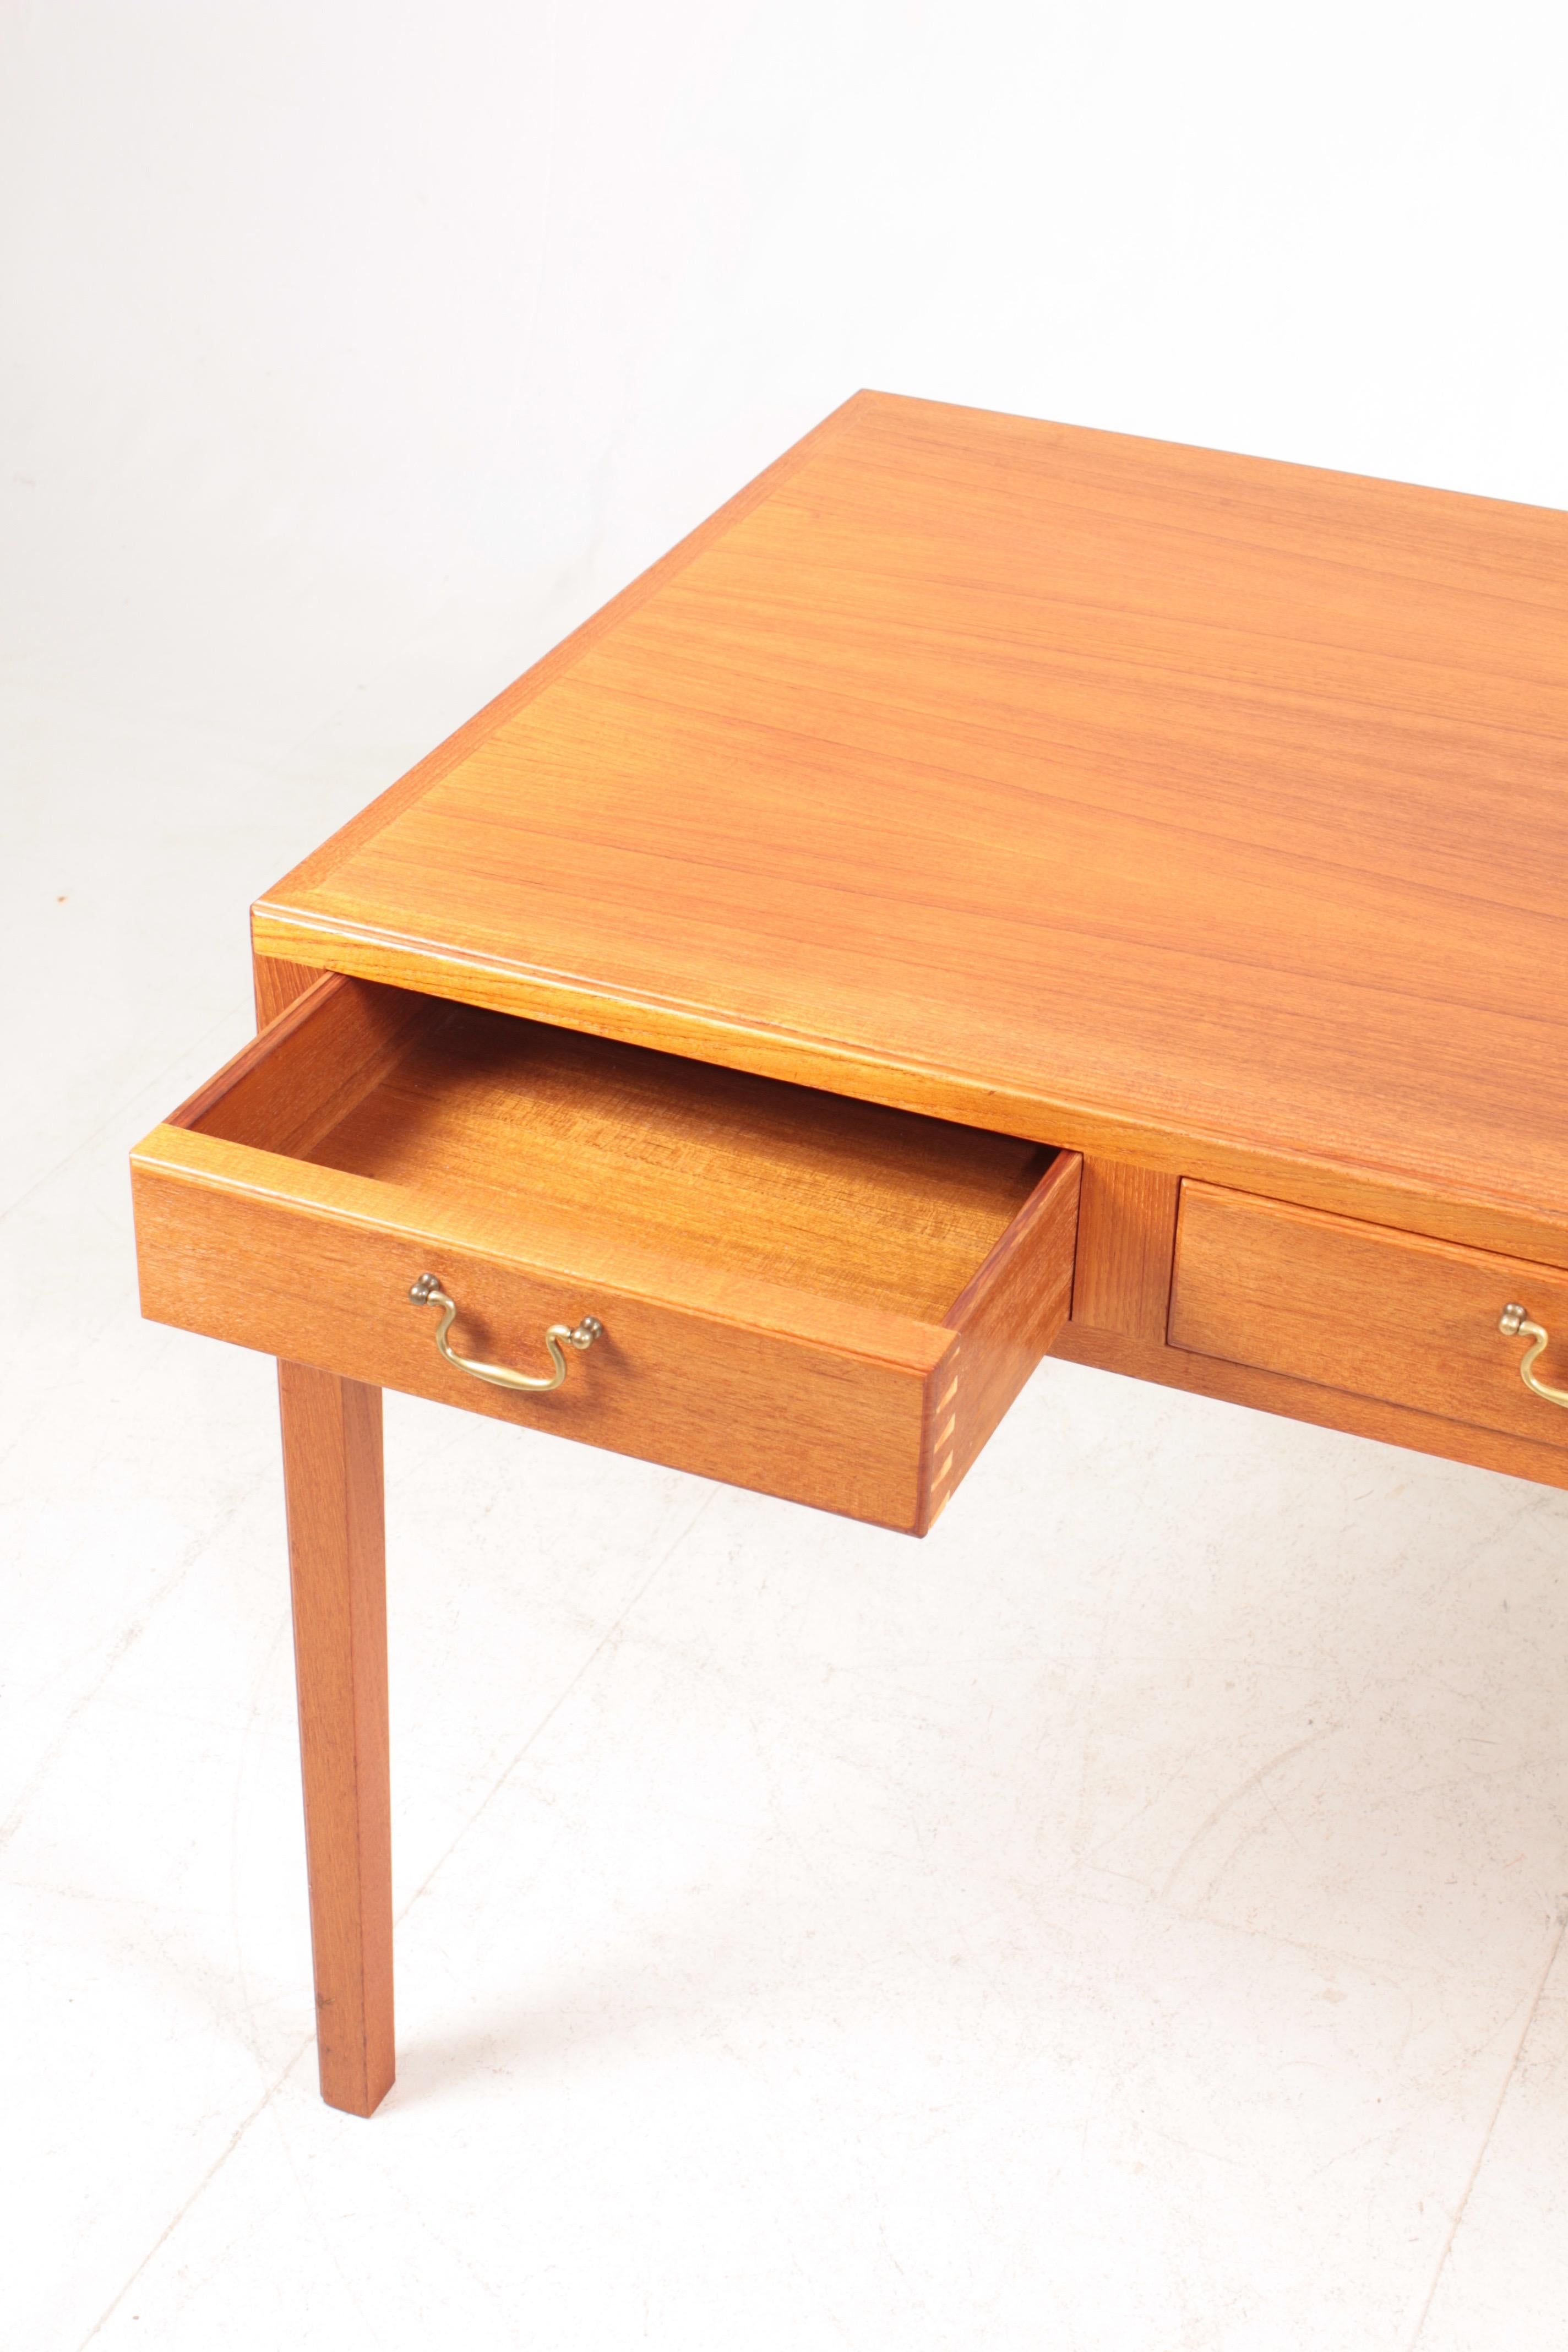 Scandinavian Modern Desk in Teak in Style of Ole Wanscher, Midcentury Danish Design, 1950s For Sale